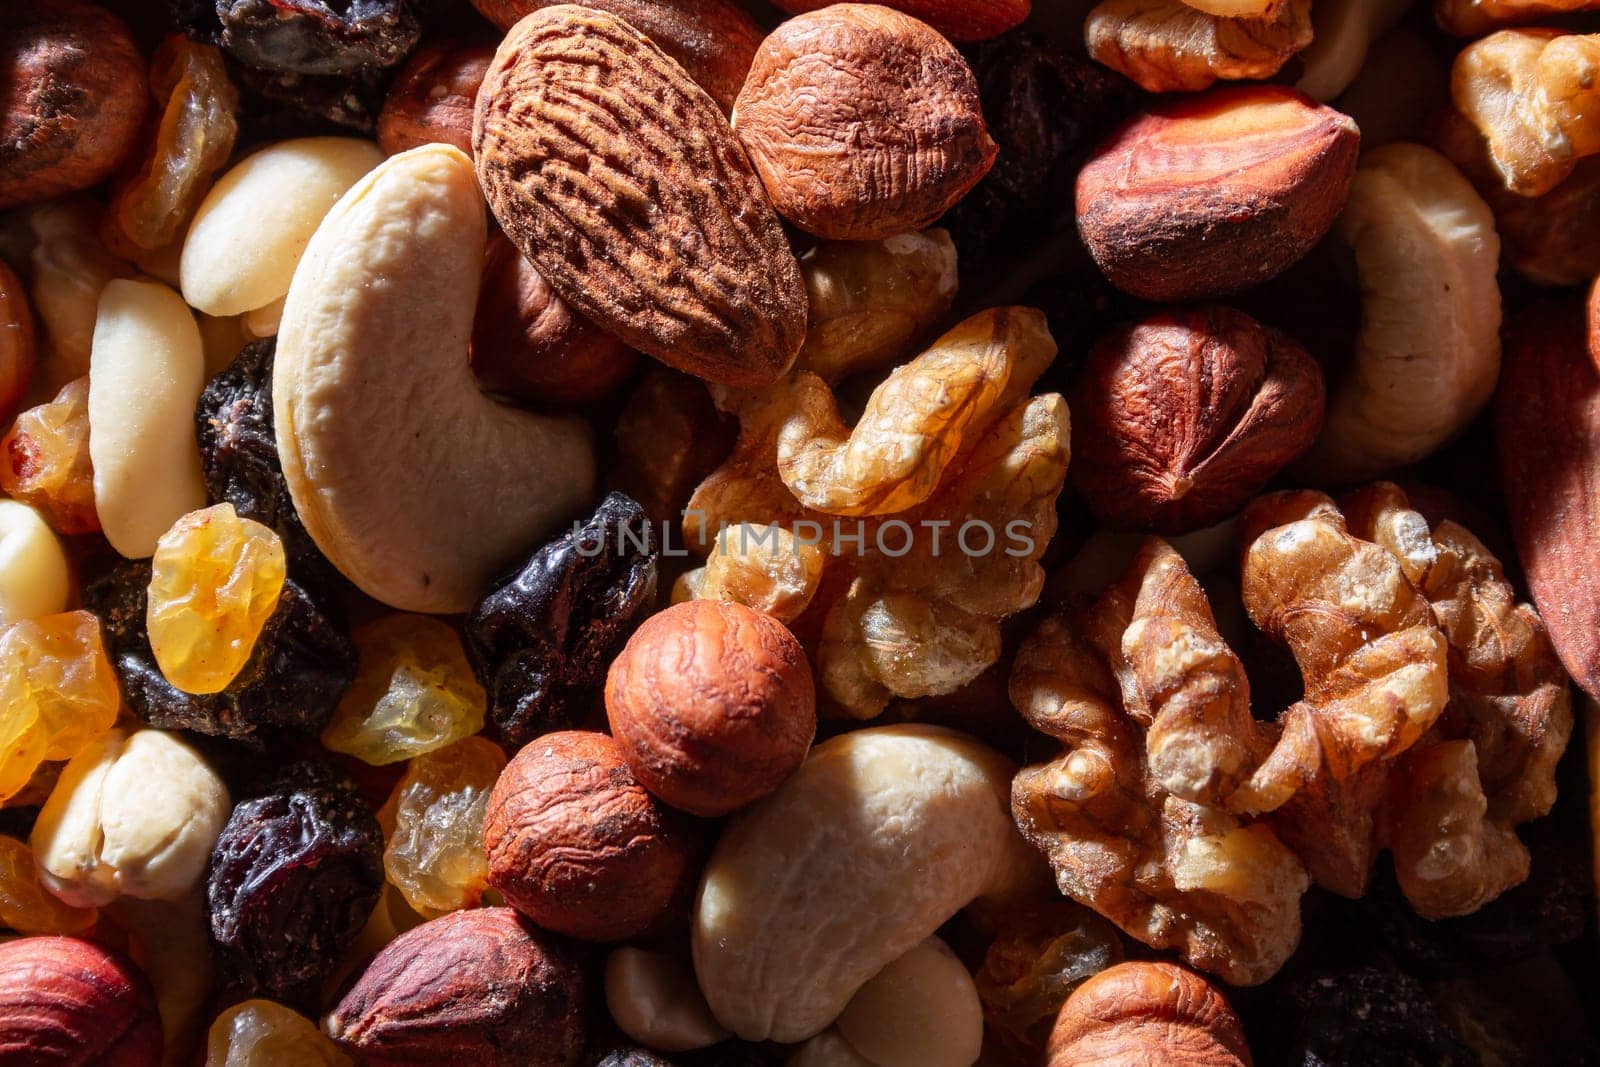 Mixed Nuts: Almonds, Walnuts, Cashews, Peanuts, Hazelnuts, Dried Prunes and Raisins by InfinitumProdux